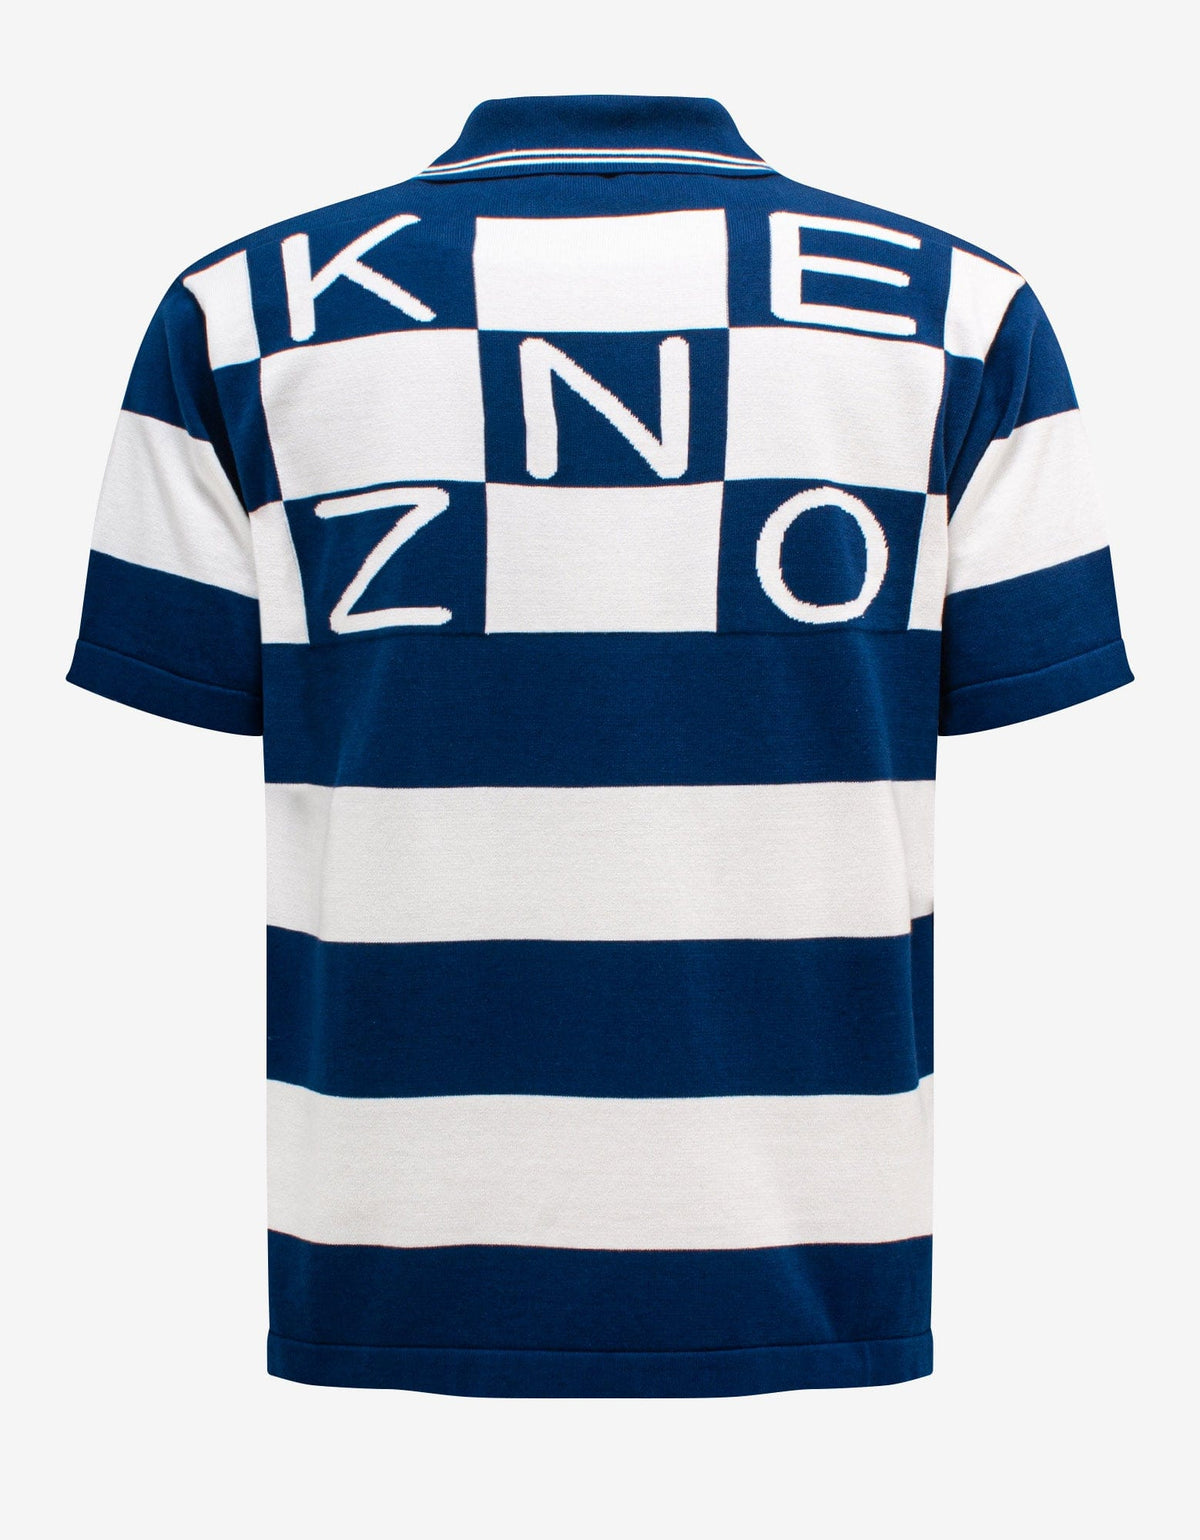 Kenzo Blue & White Stripe Polo T-Shirt